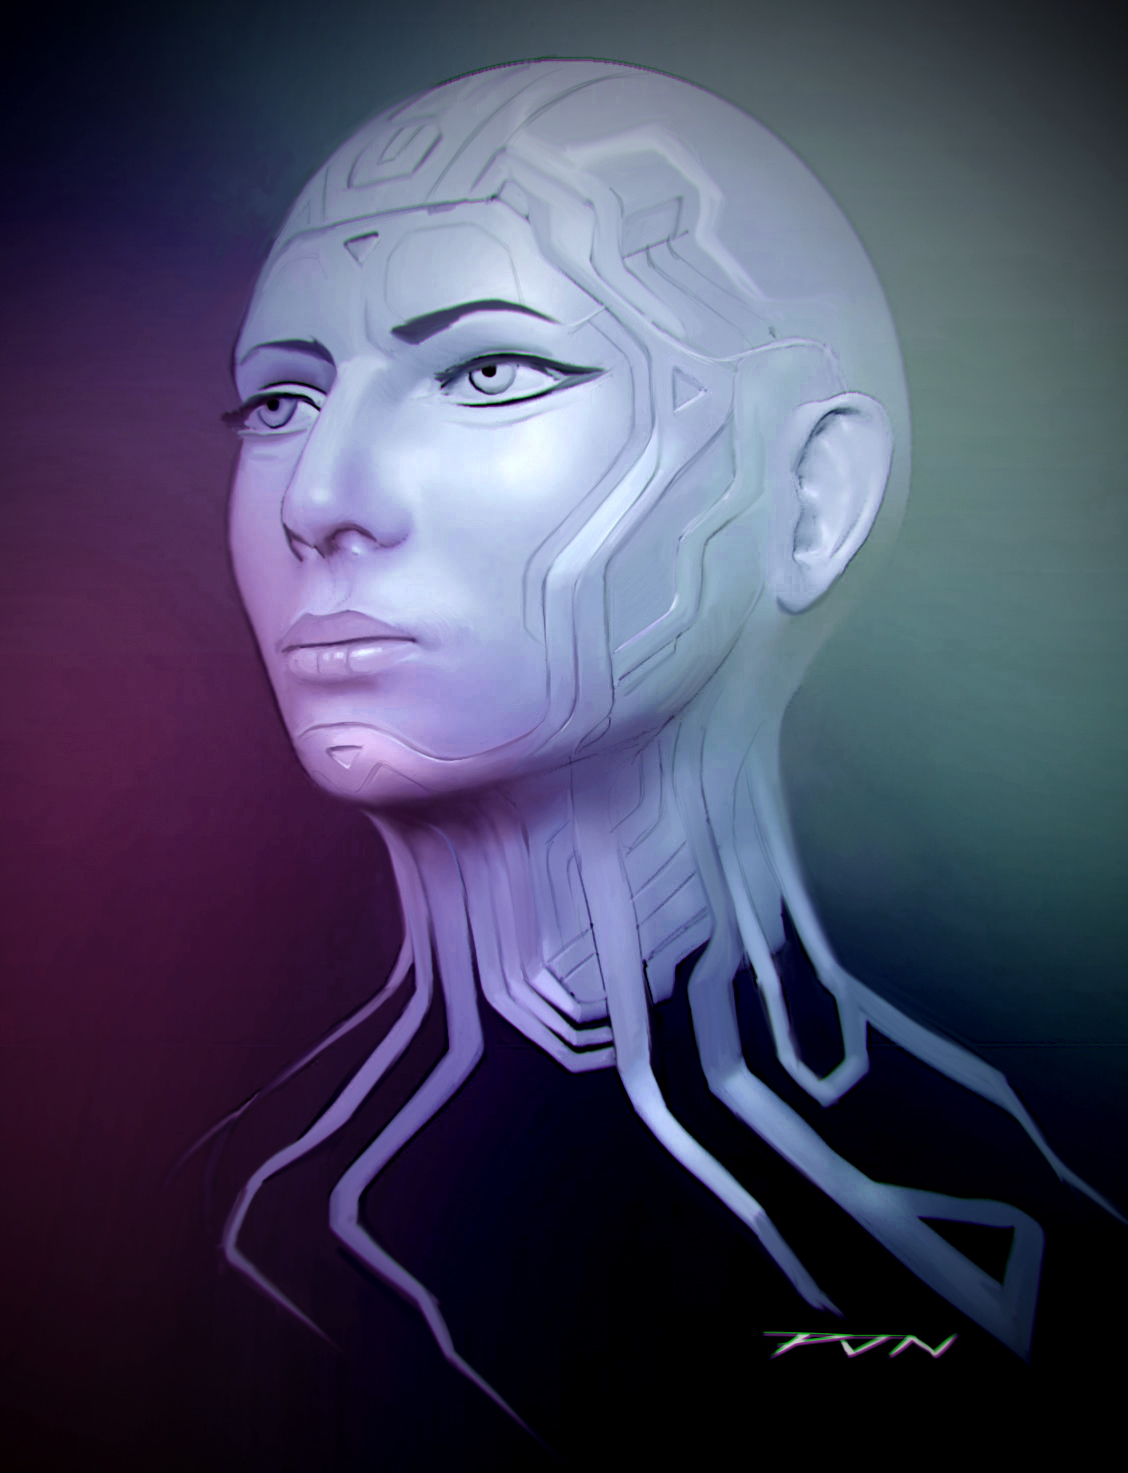 Cyborg future futuristic mech robots robot droid human concept concept art digital painting